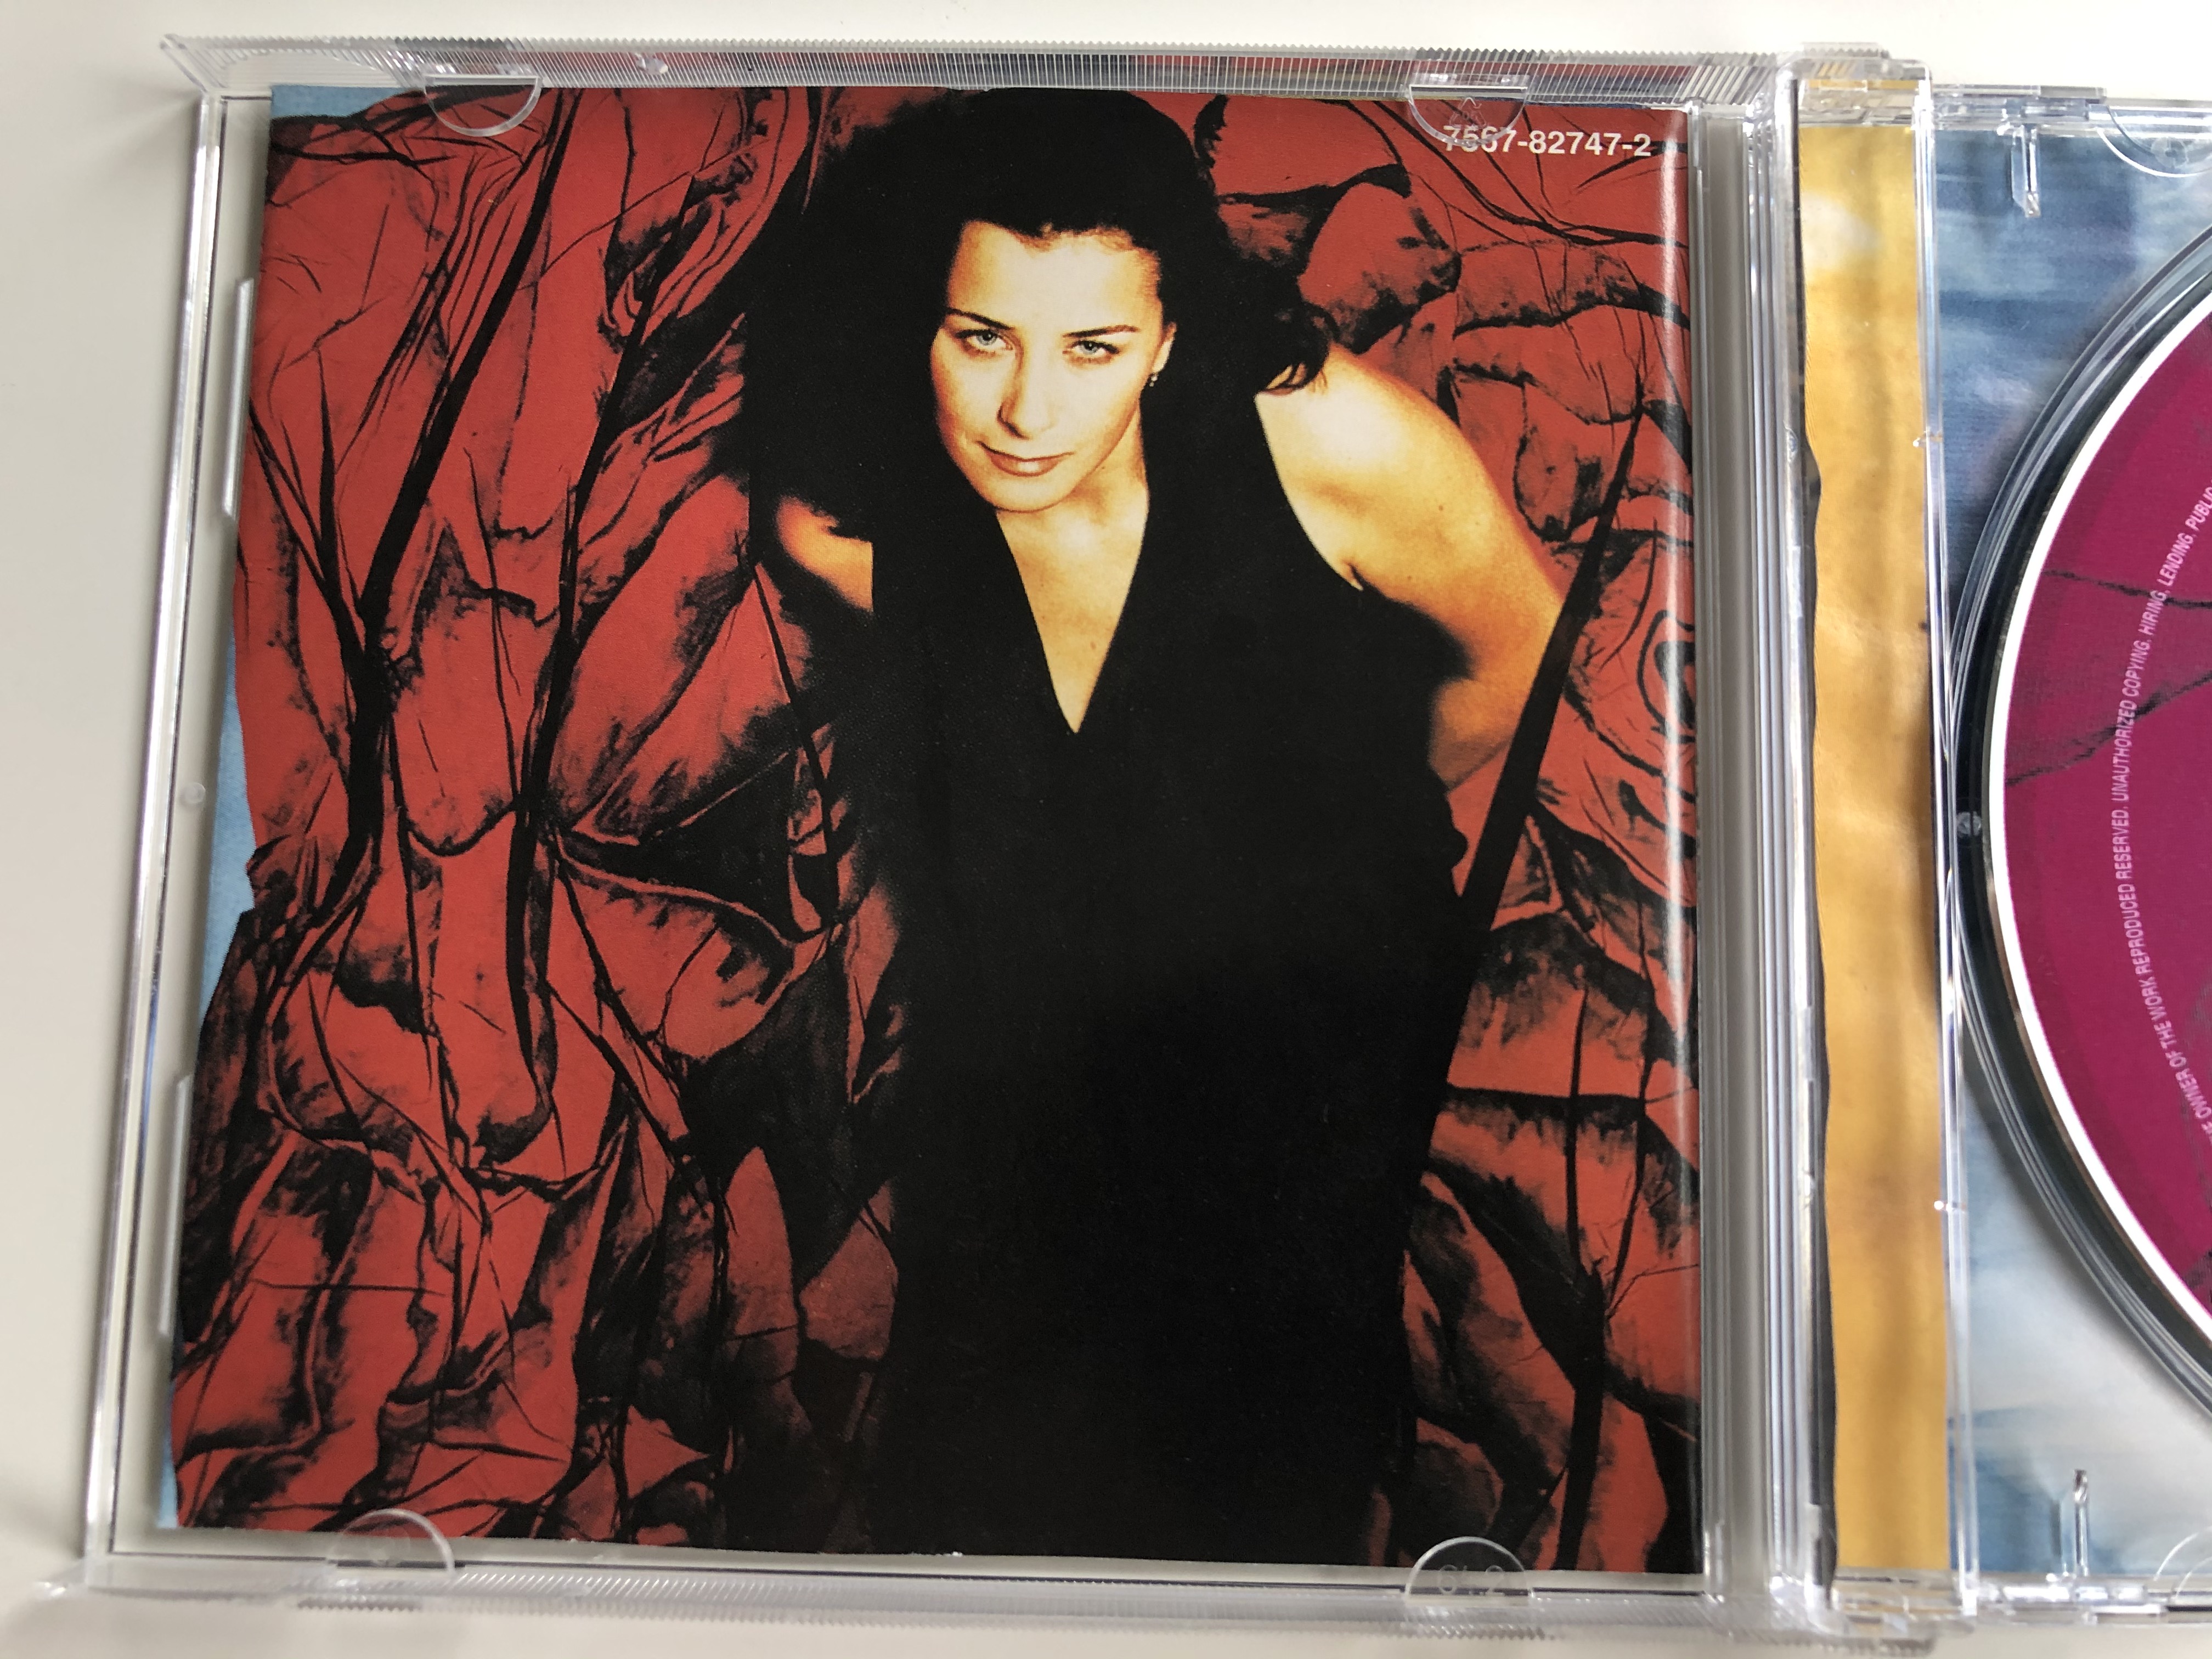 melissa-ferrick-willing-to-wait-atlantic-audio-cd-1995-7567-82747-2-2-.jpg